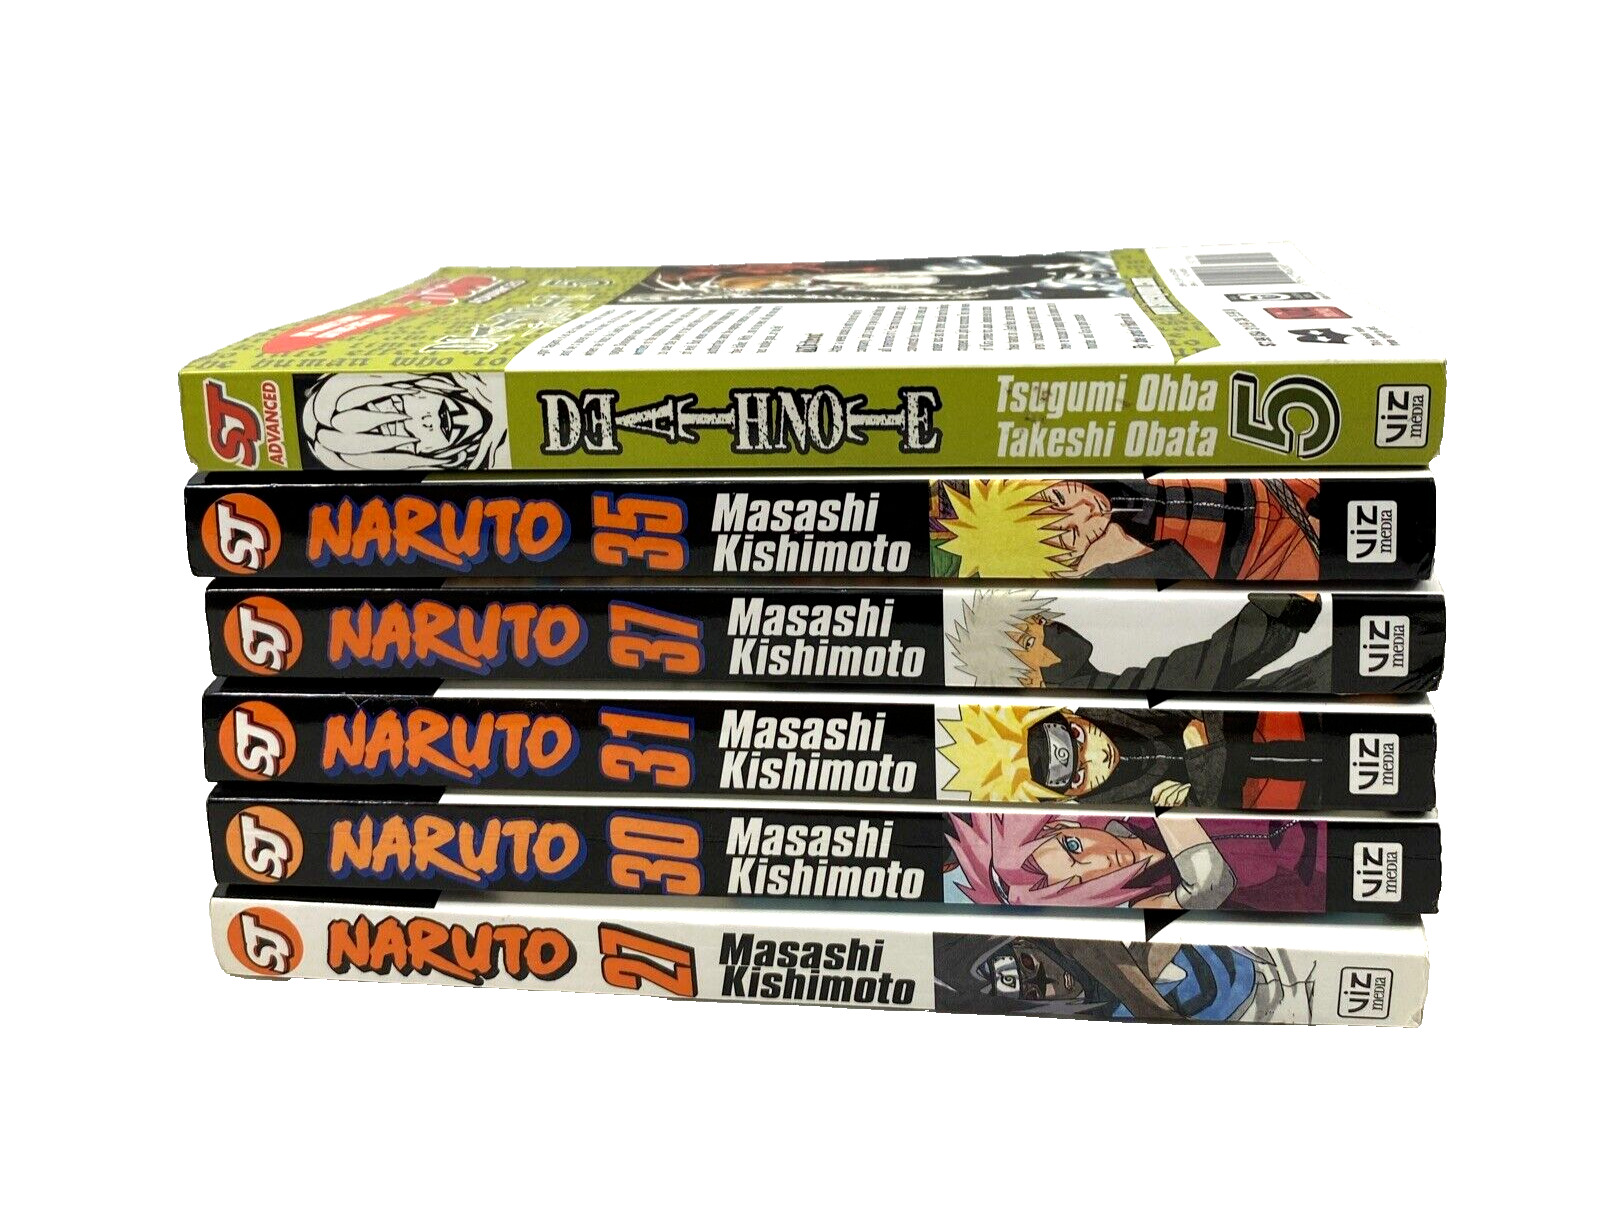 Shonen Jump Naruto Manga Issues 27 30 31 35 37 Paperback Books Death Note 5